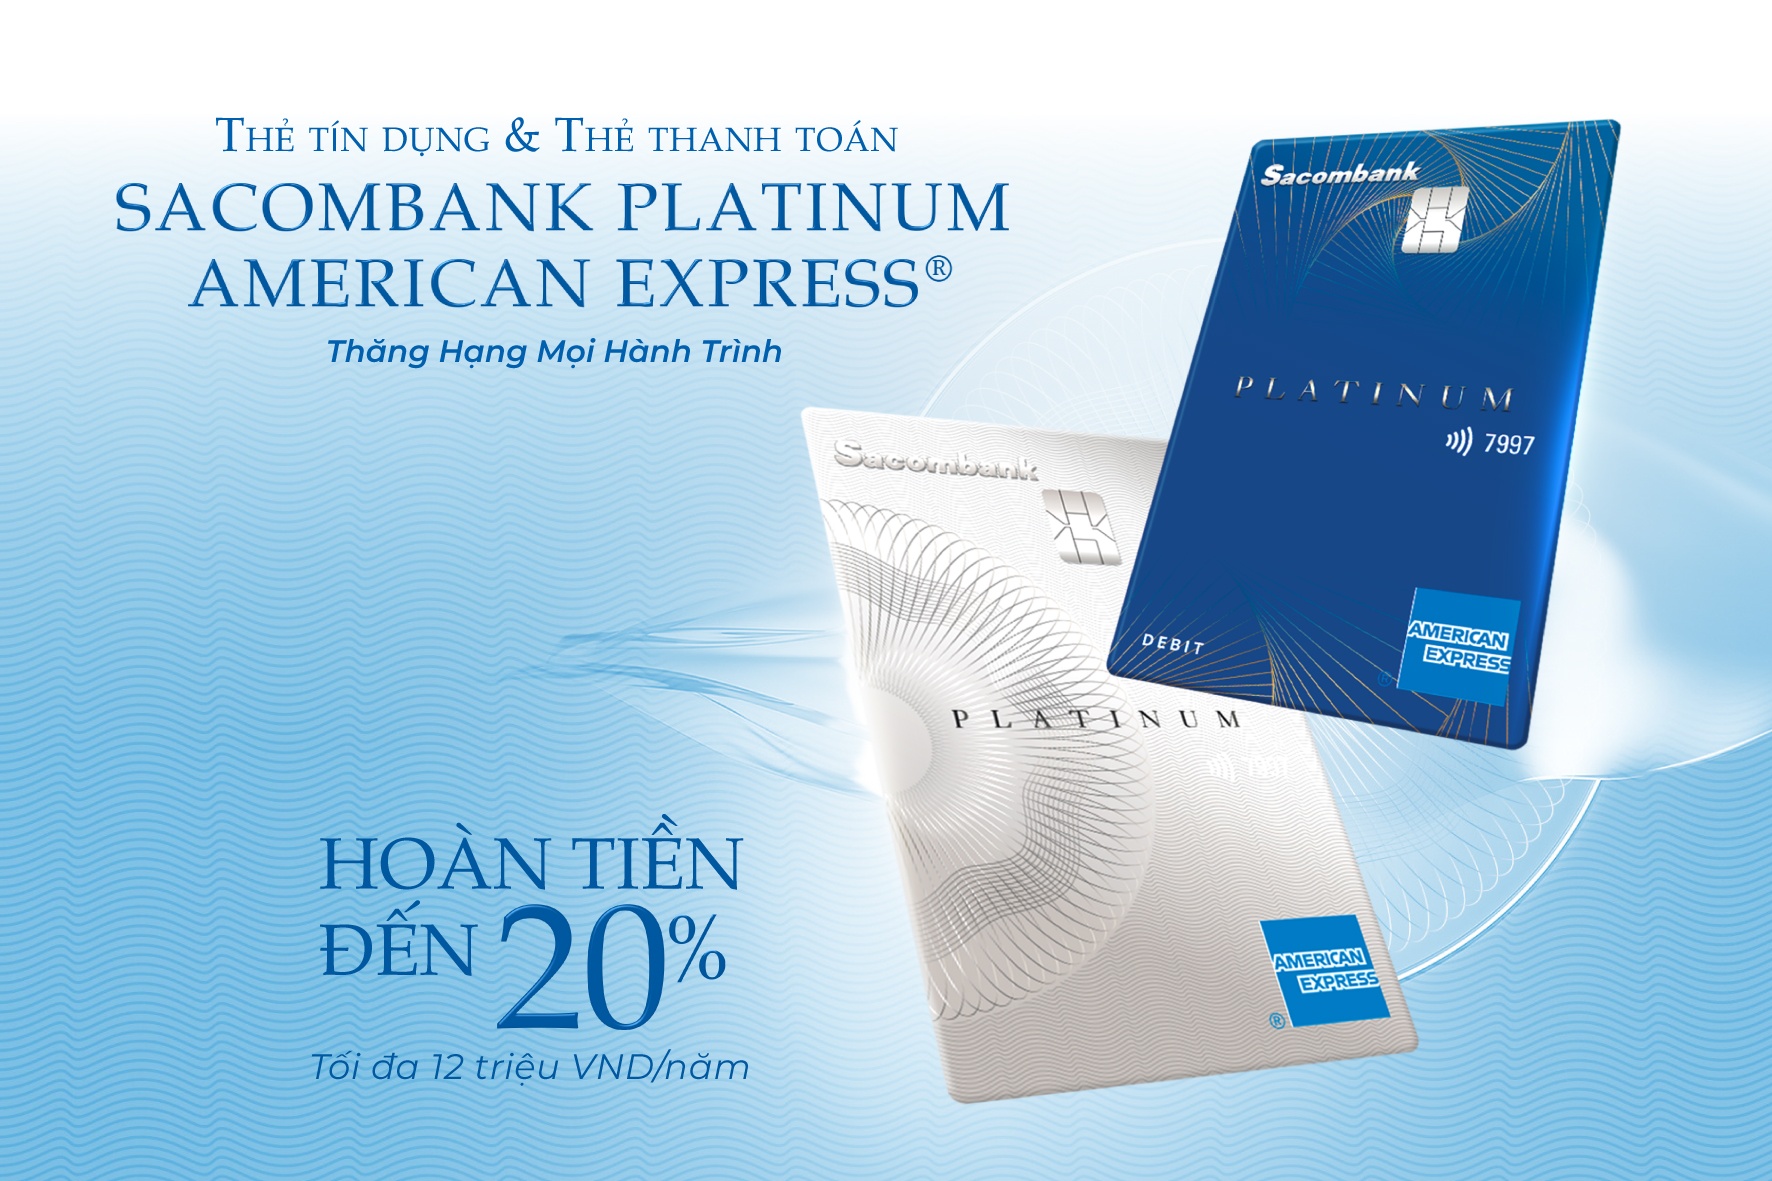 Ra mắt bộ đôi thẻ Sacombank Platinum American Express